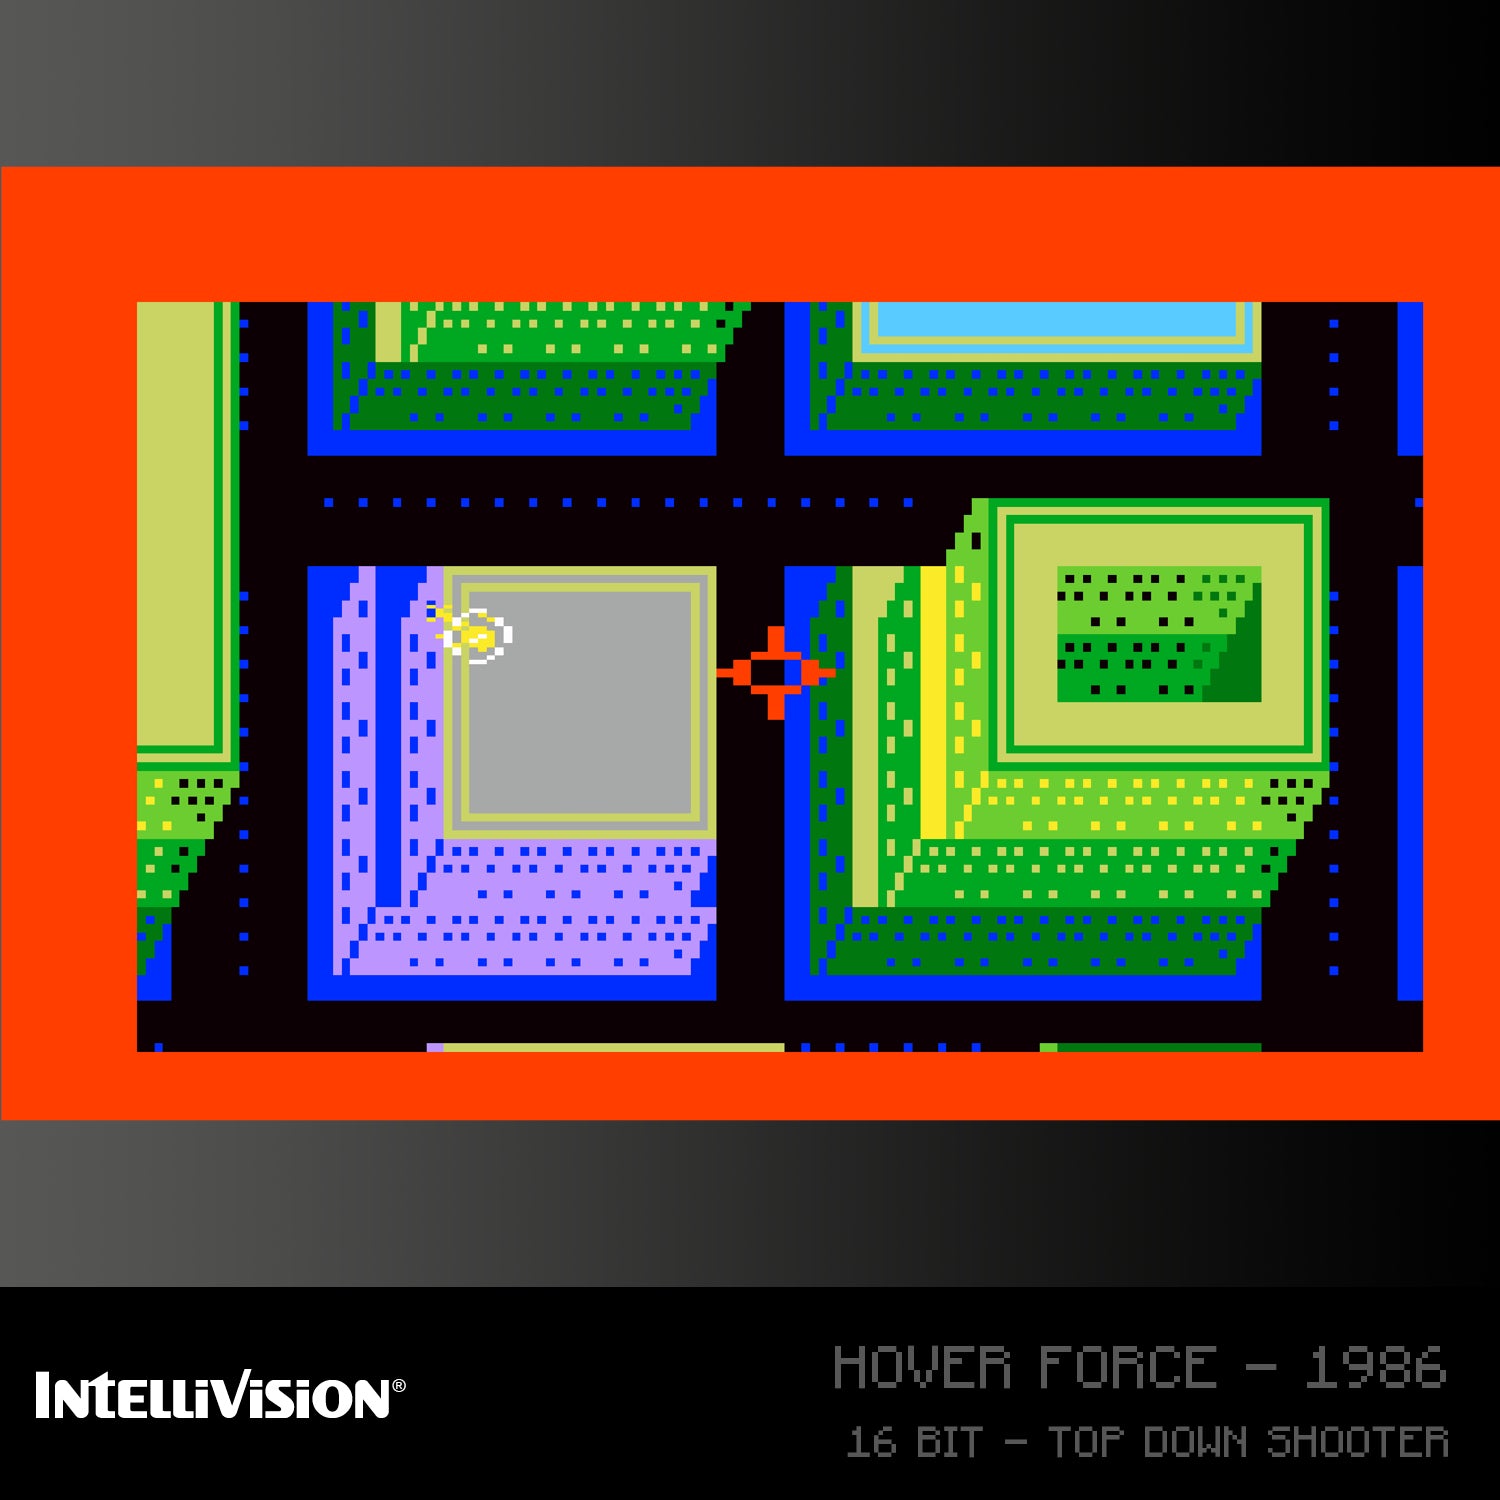 #26 Intellivision Collection 2 - Evercade Cartridge